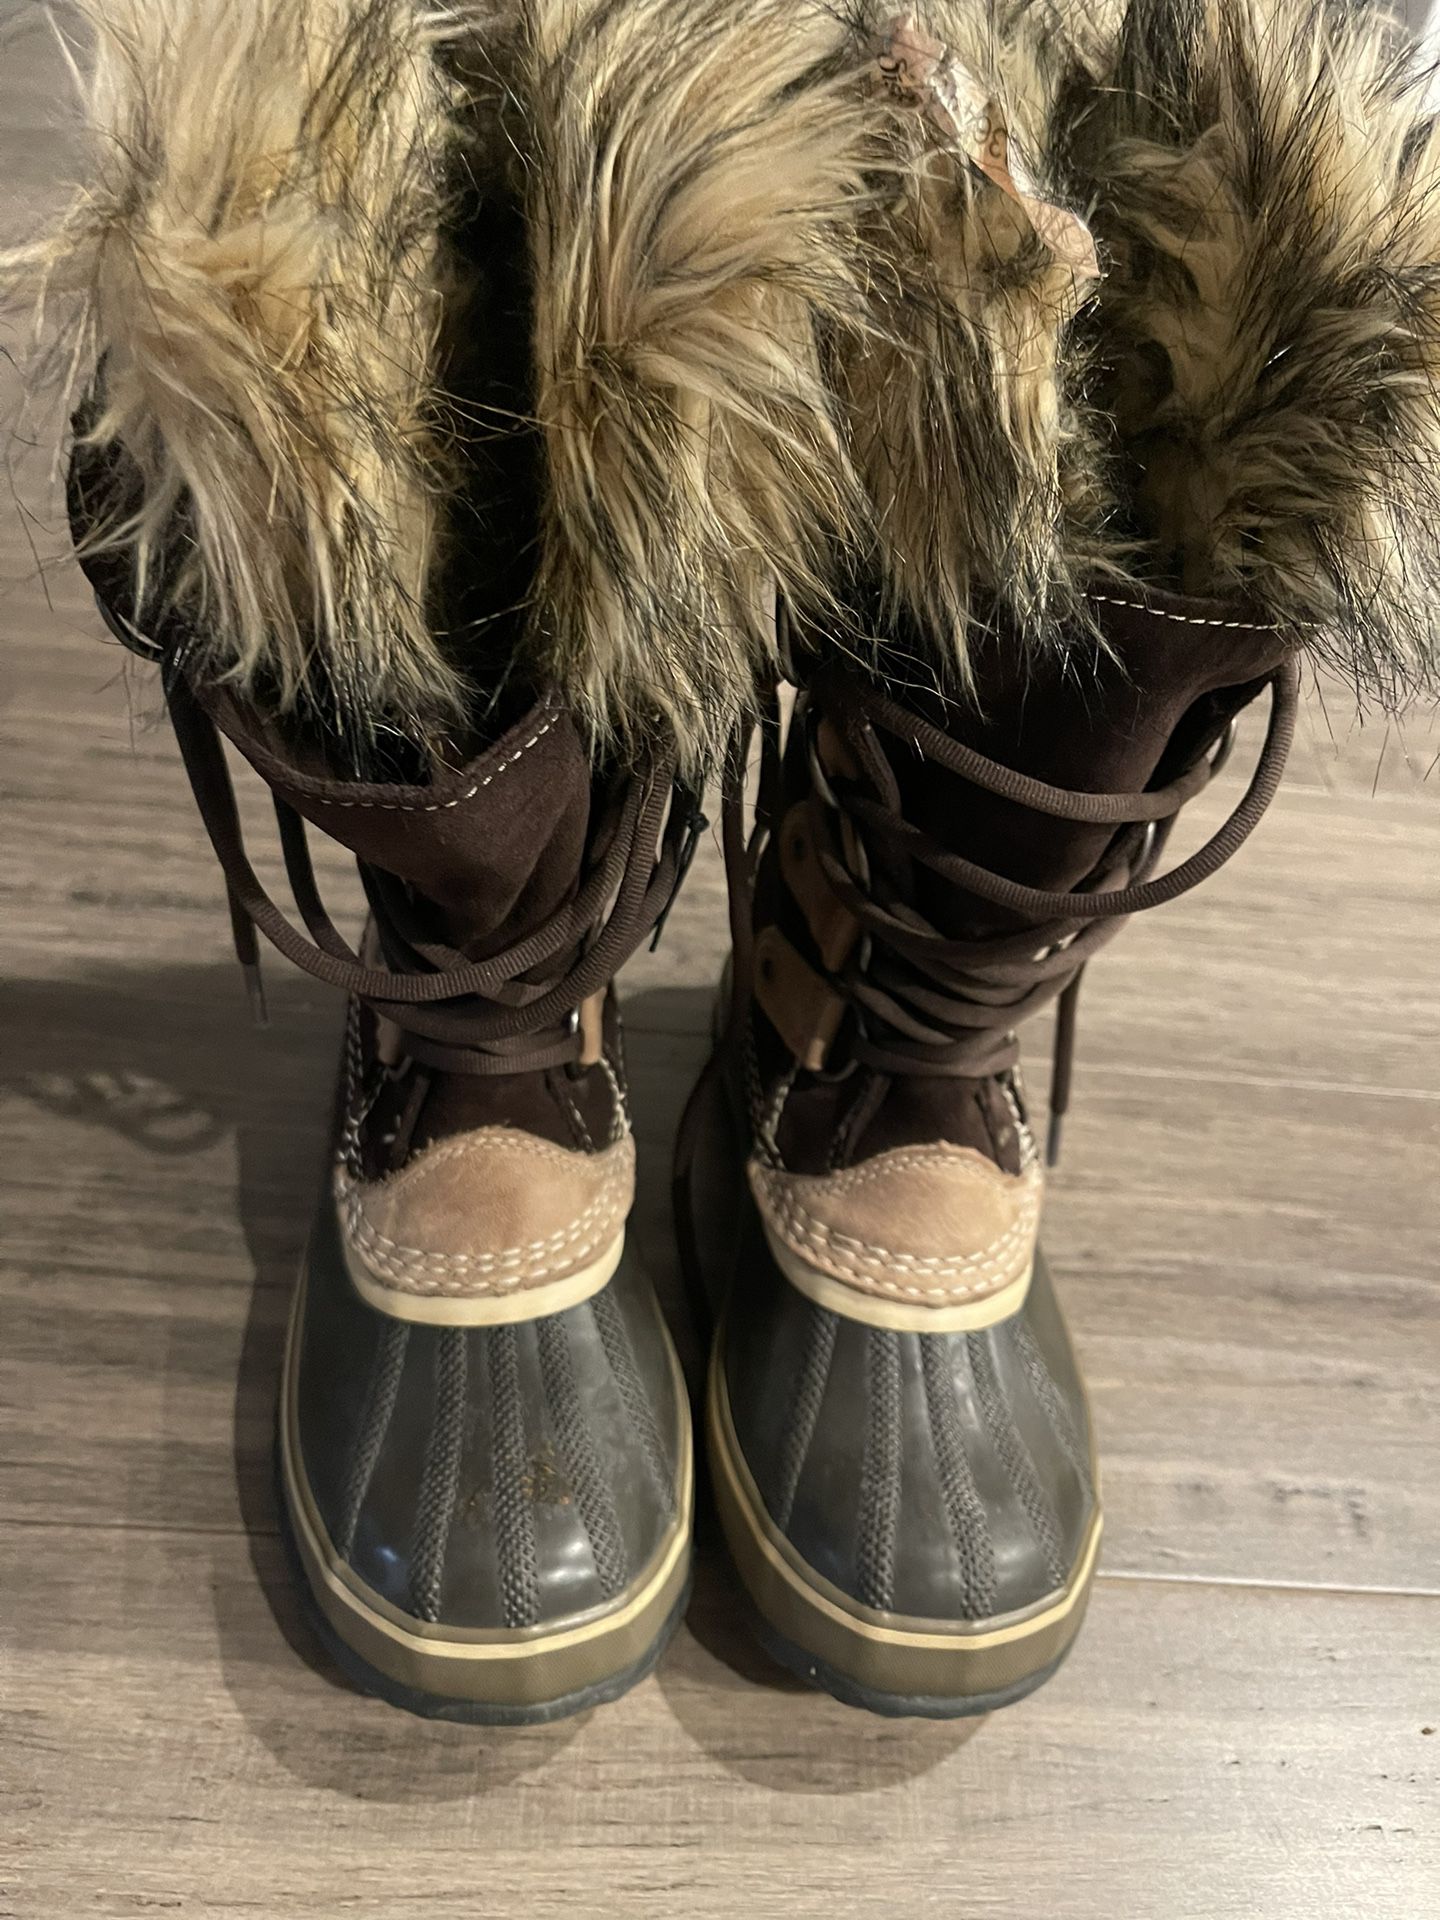 SOREL snow Boot Women’s Size 7 / Willing To Negotiate 